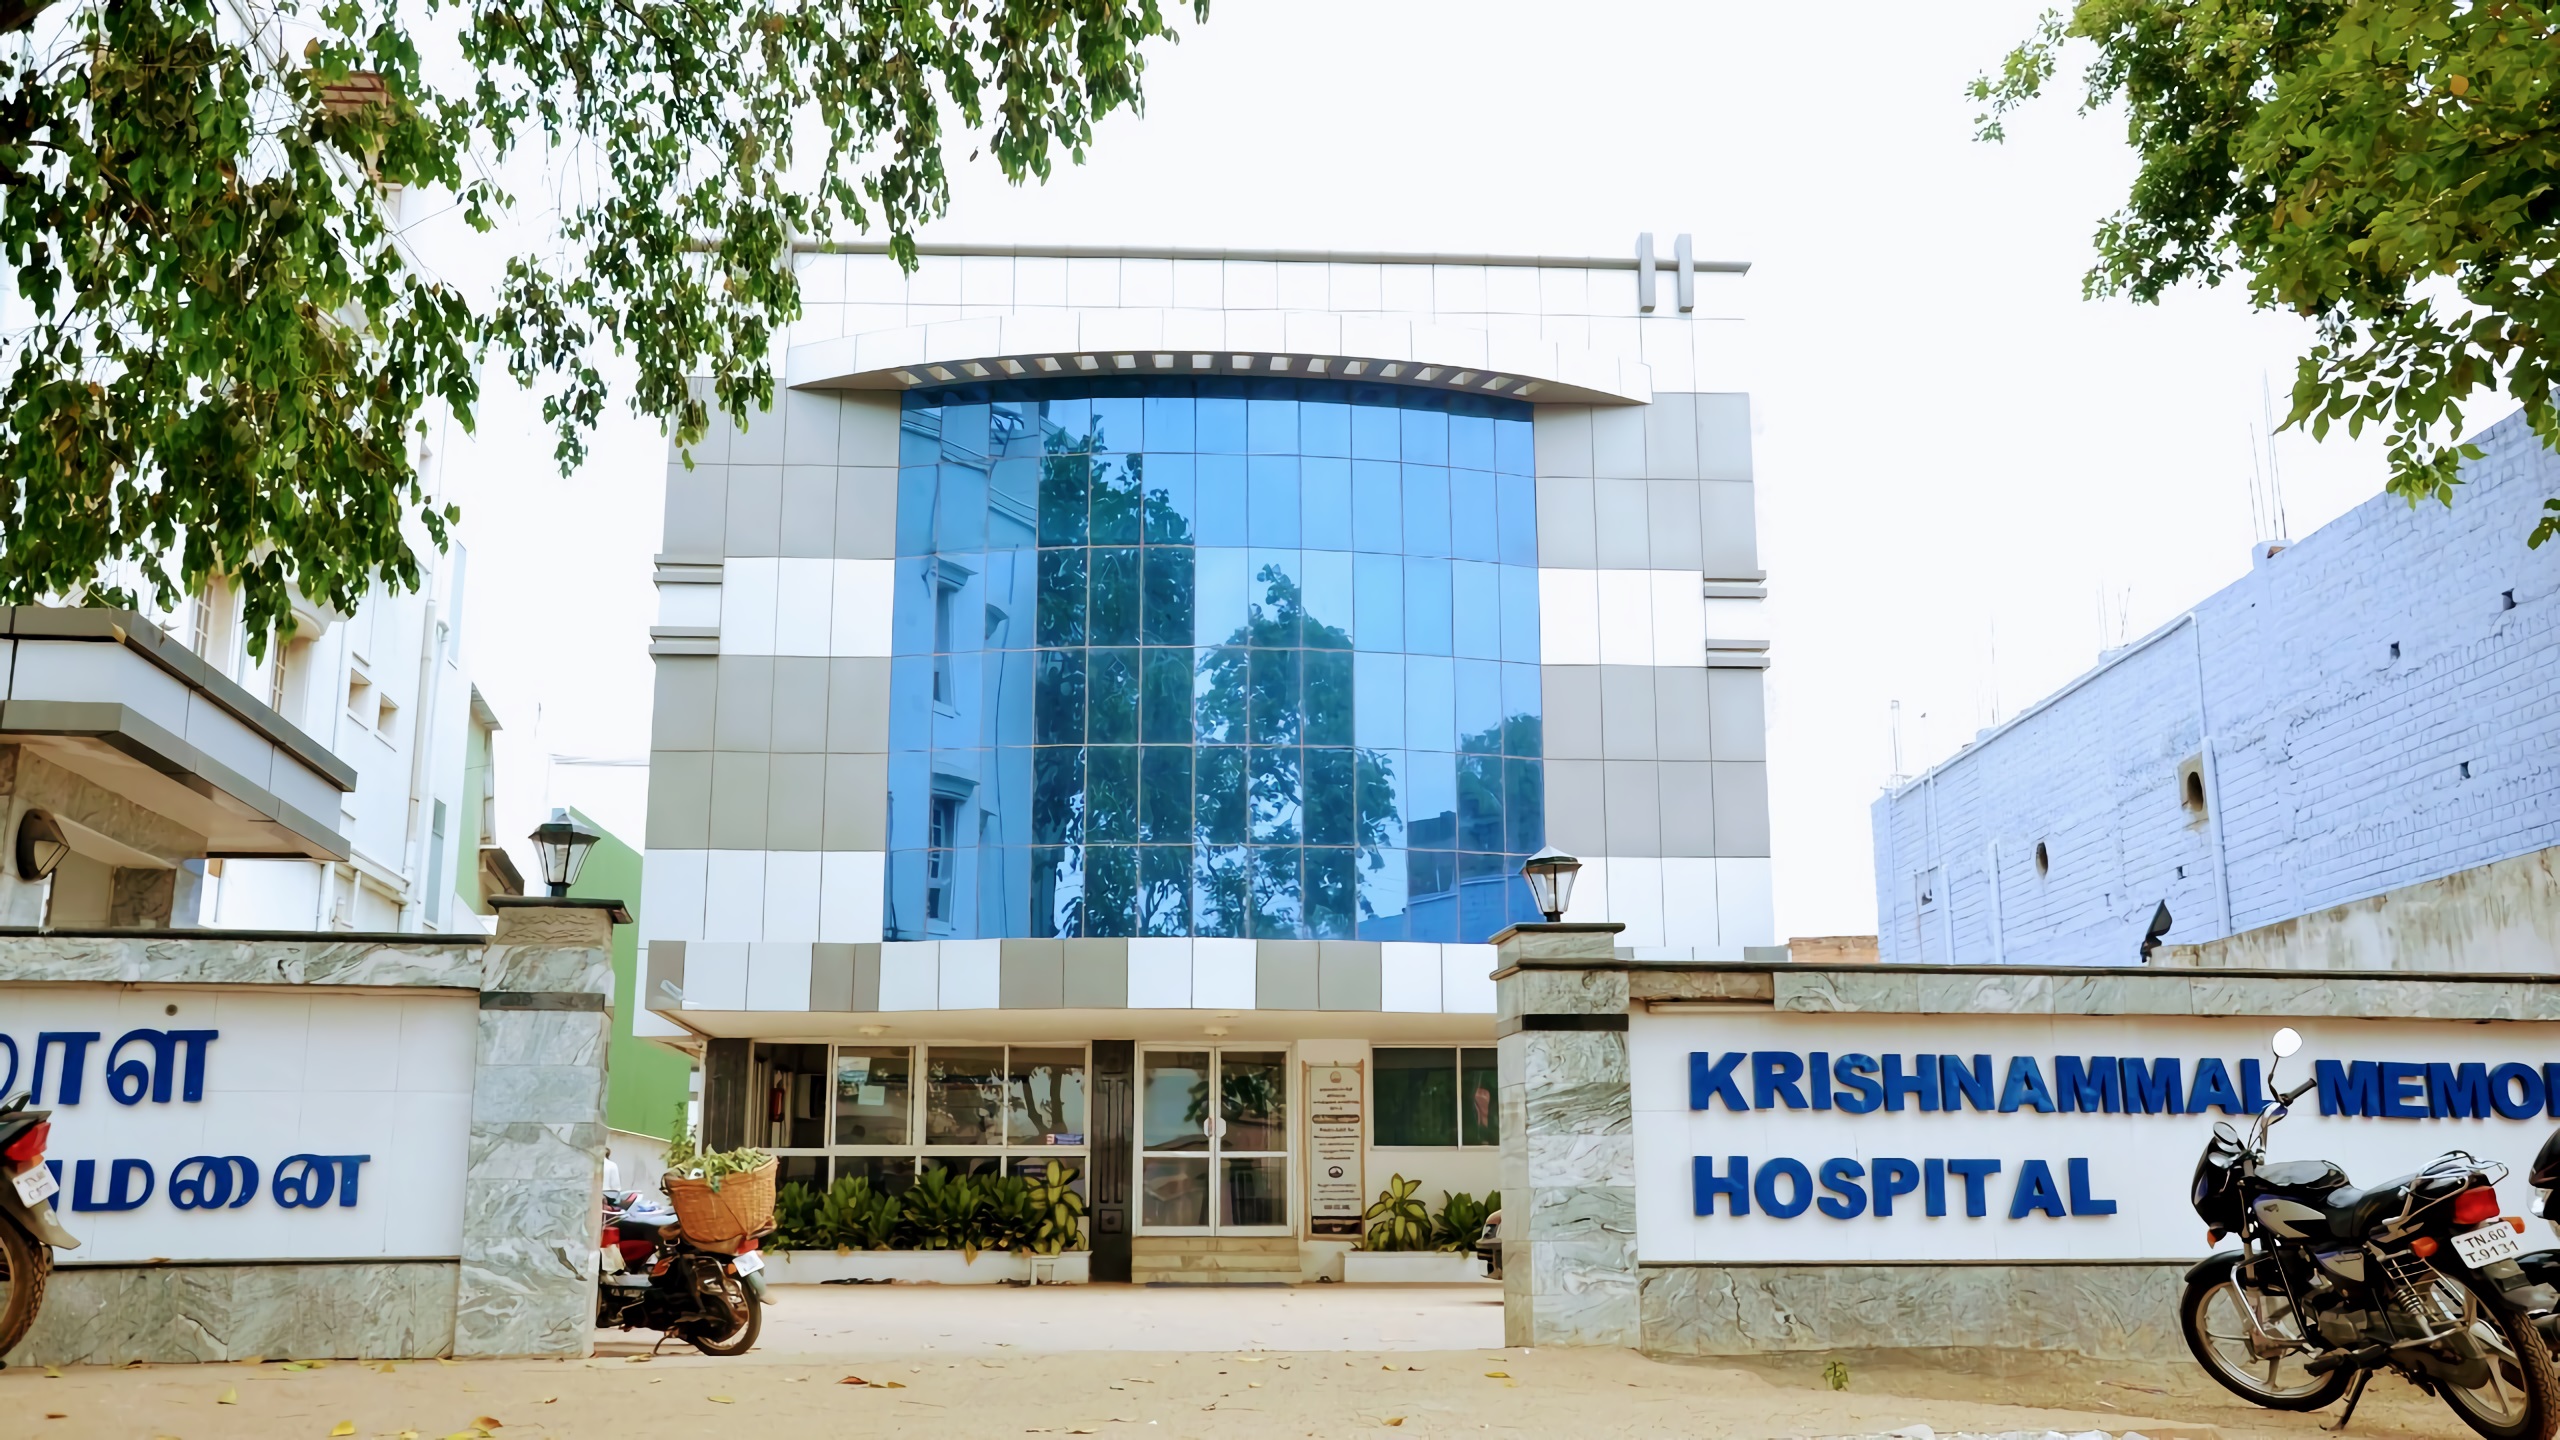 Krishnammal Memorial Hospital